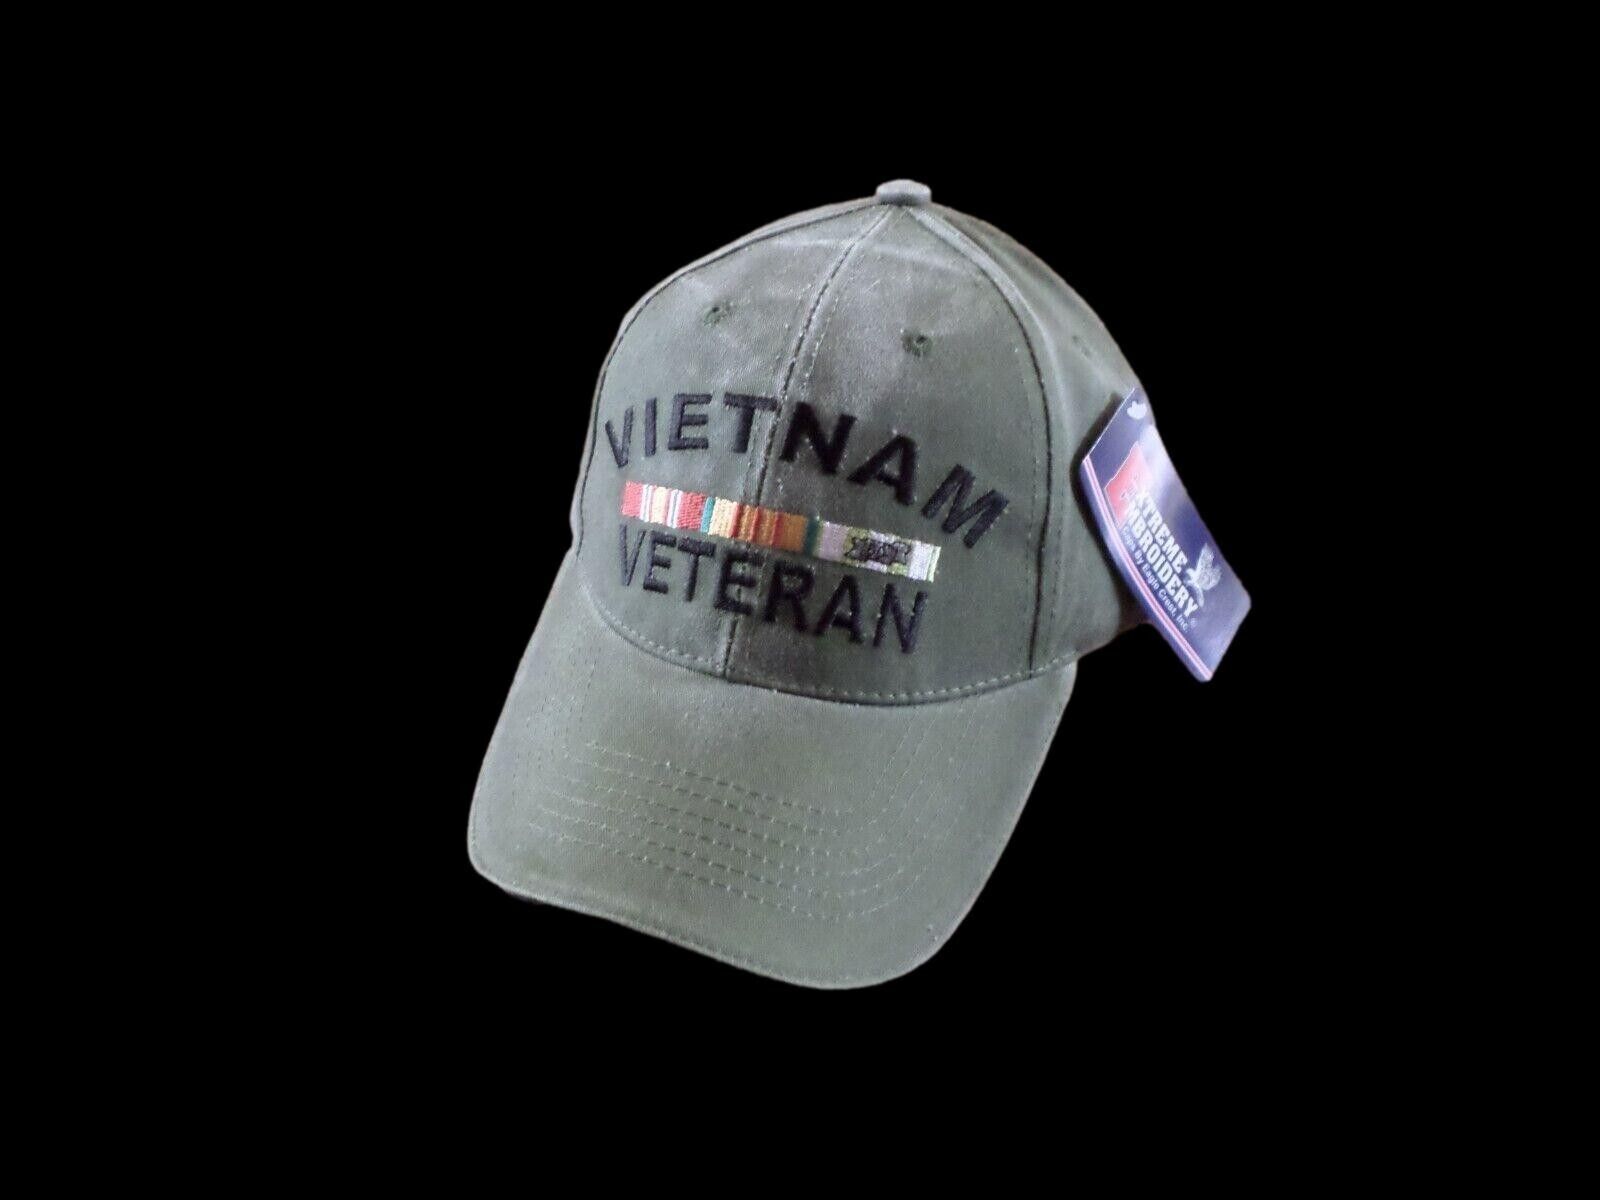 U.S MILITARY VIETNAM VETERAN HAT BALL CAP STONE WASHED OD GREEN